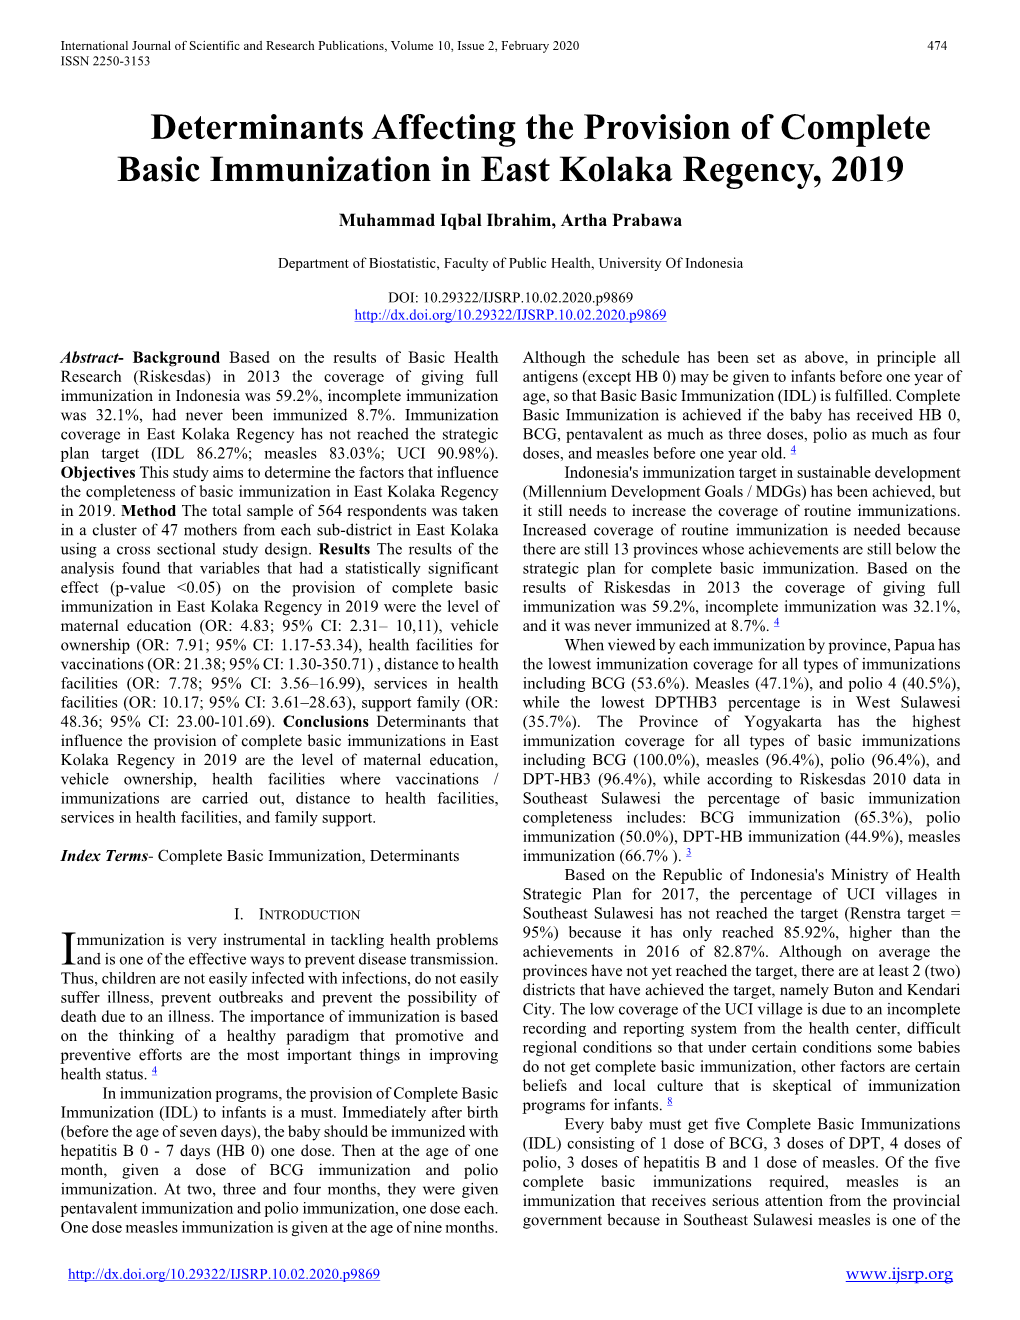 Determinants Affecting the Provision of Complete Basic Immunization in East Kolaka Regency, 2019